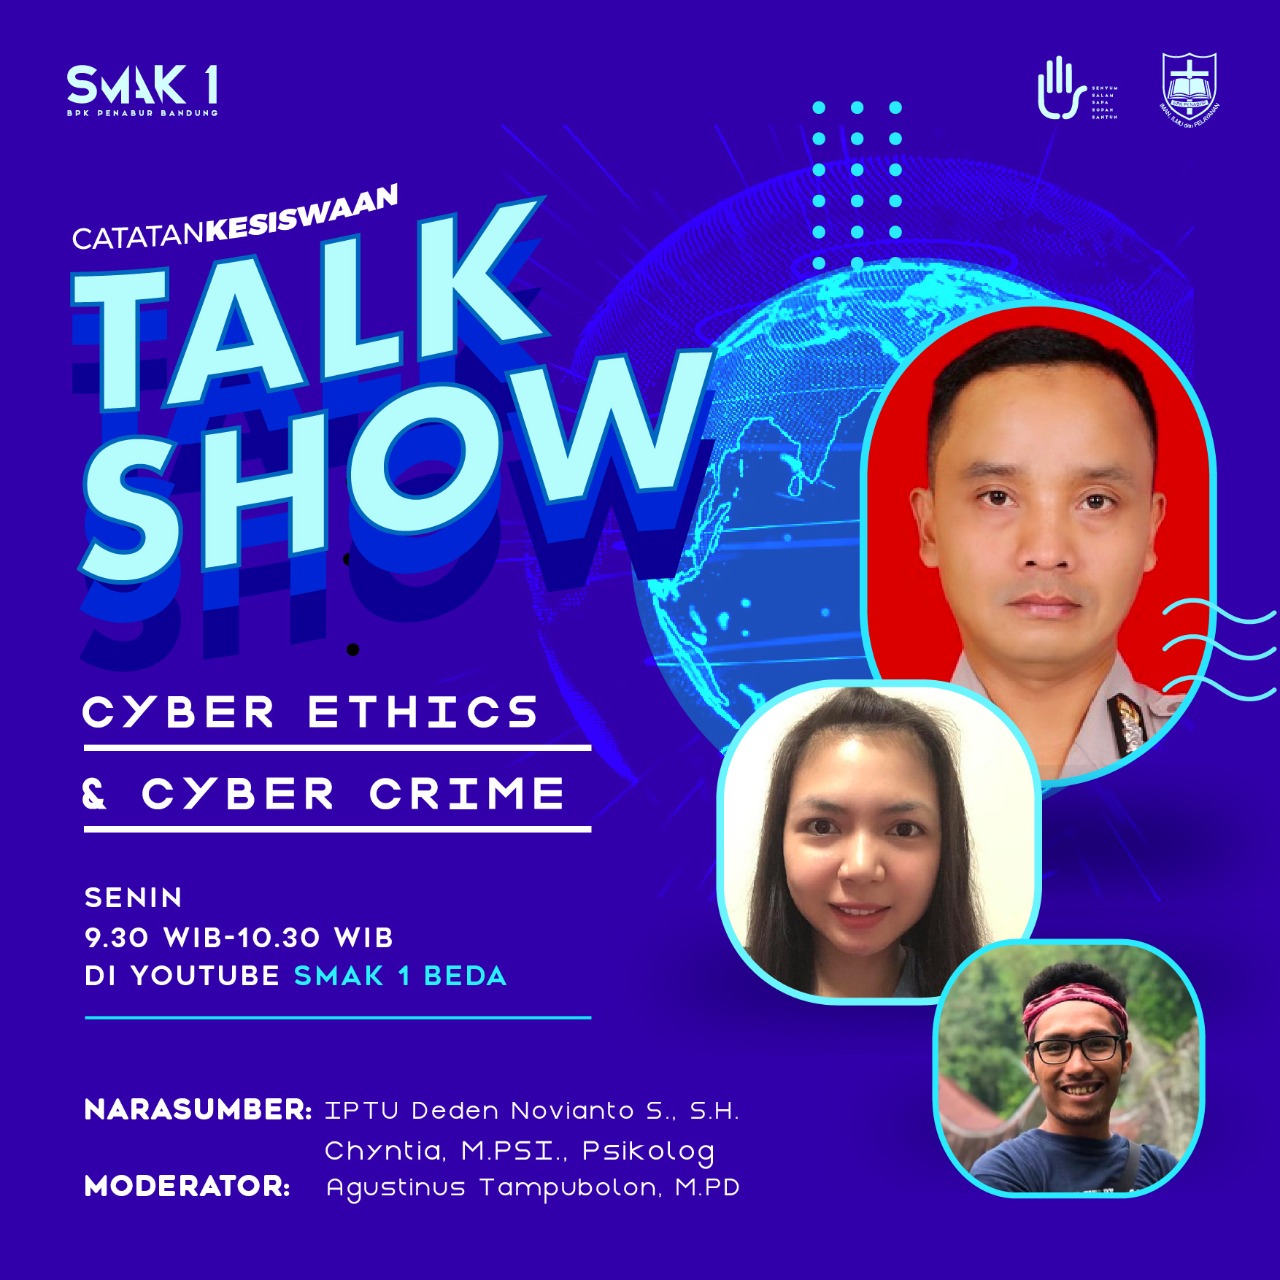 Talkshow "CYBER CRIME & CYBER ETHICS"  Jumat, 19 Maret 2021 / Channel Youtube SMAK 1 BEDA